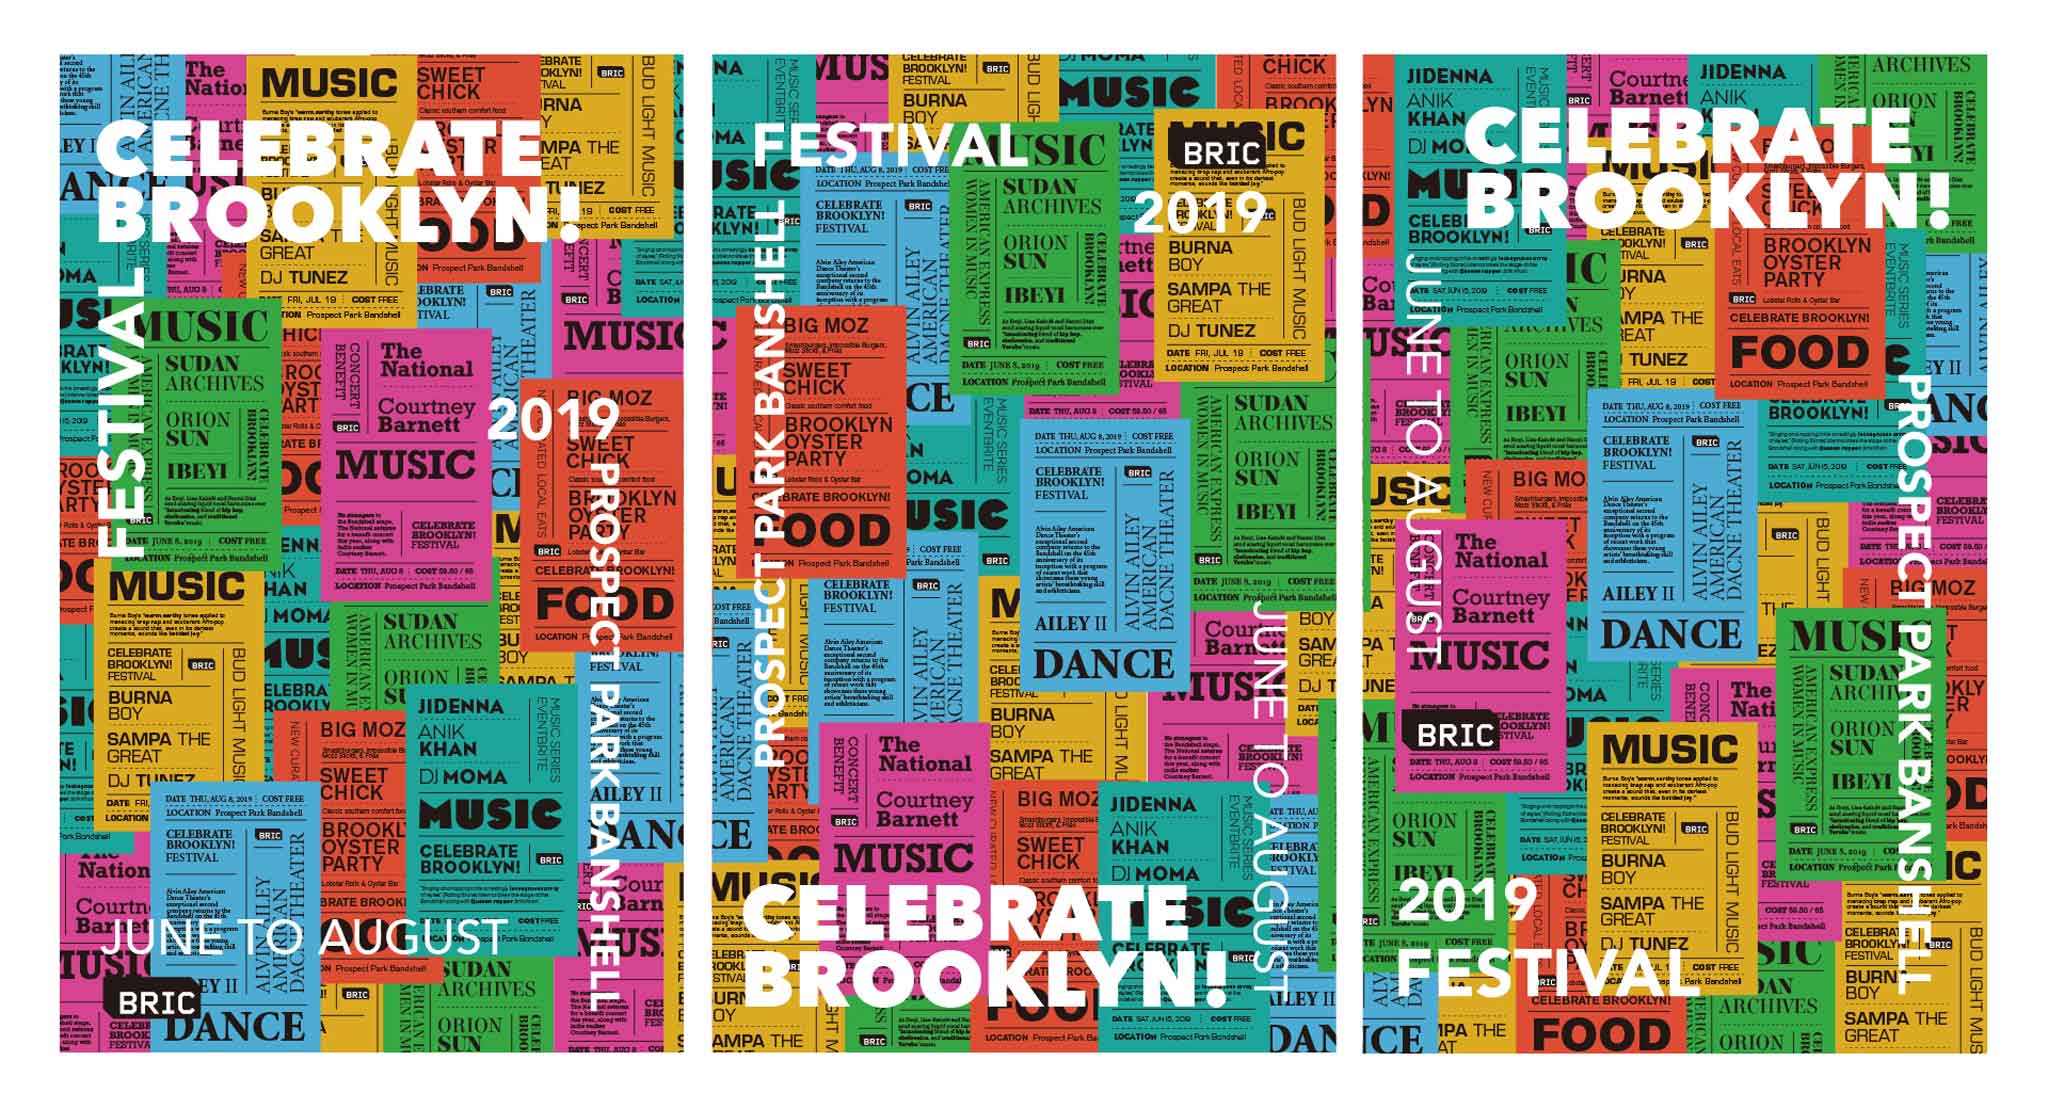 Celebrate Brooklyn! Festival by Haotian Wu SVA Design